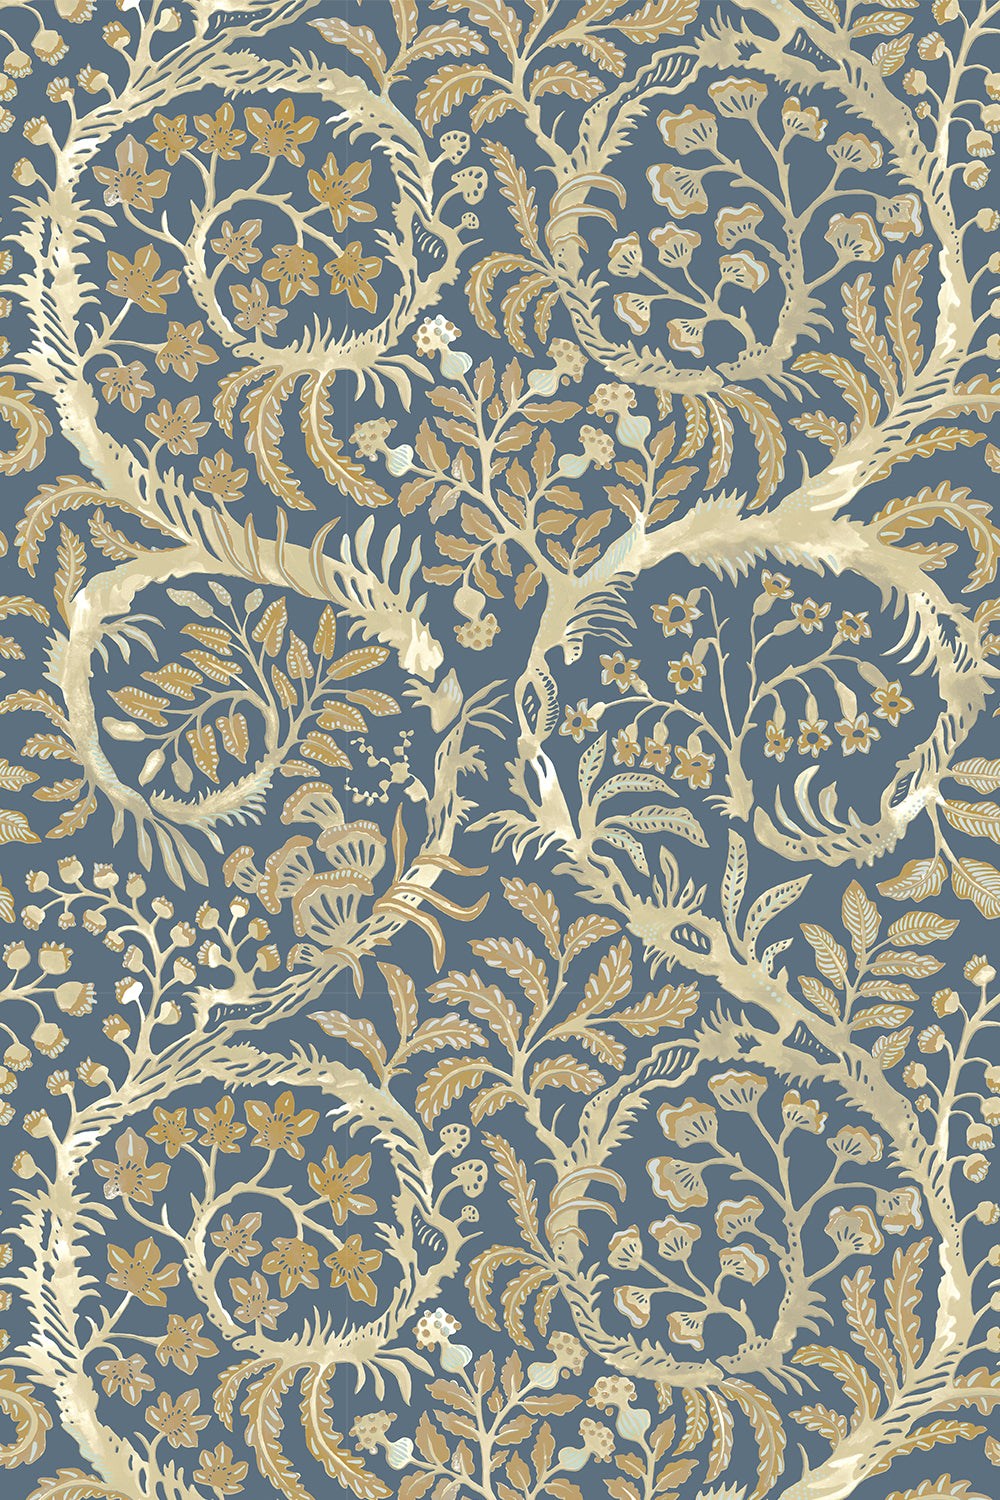 Josephine-Munsey-wallpaper-butterrow-bude-blue-antique-foliage-traditional-shell-shapes-botanical-print-trailing-pattern